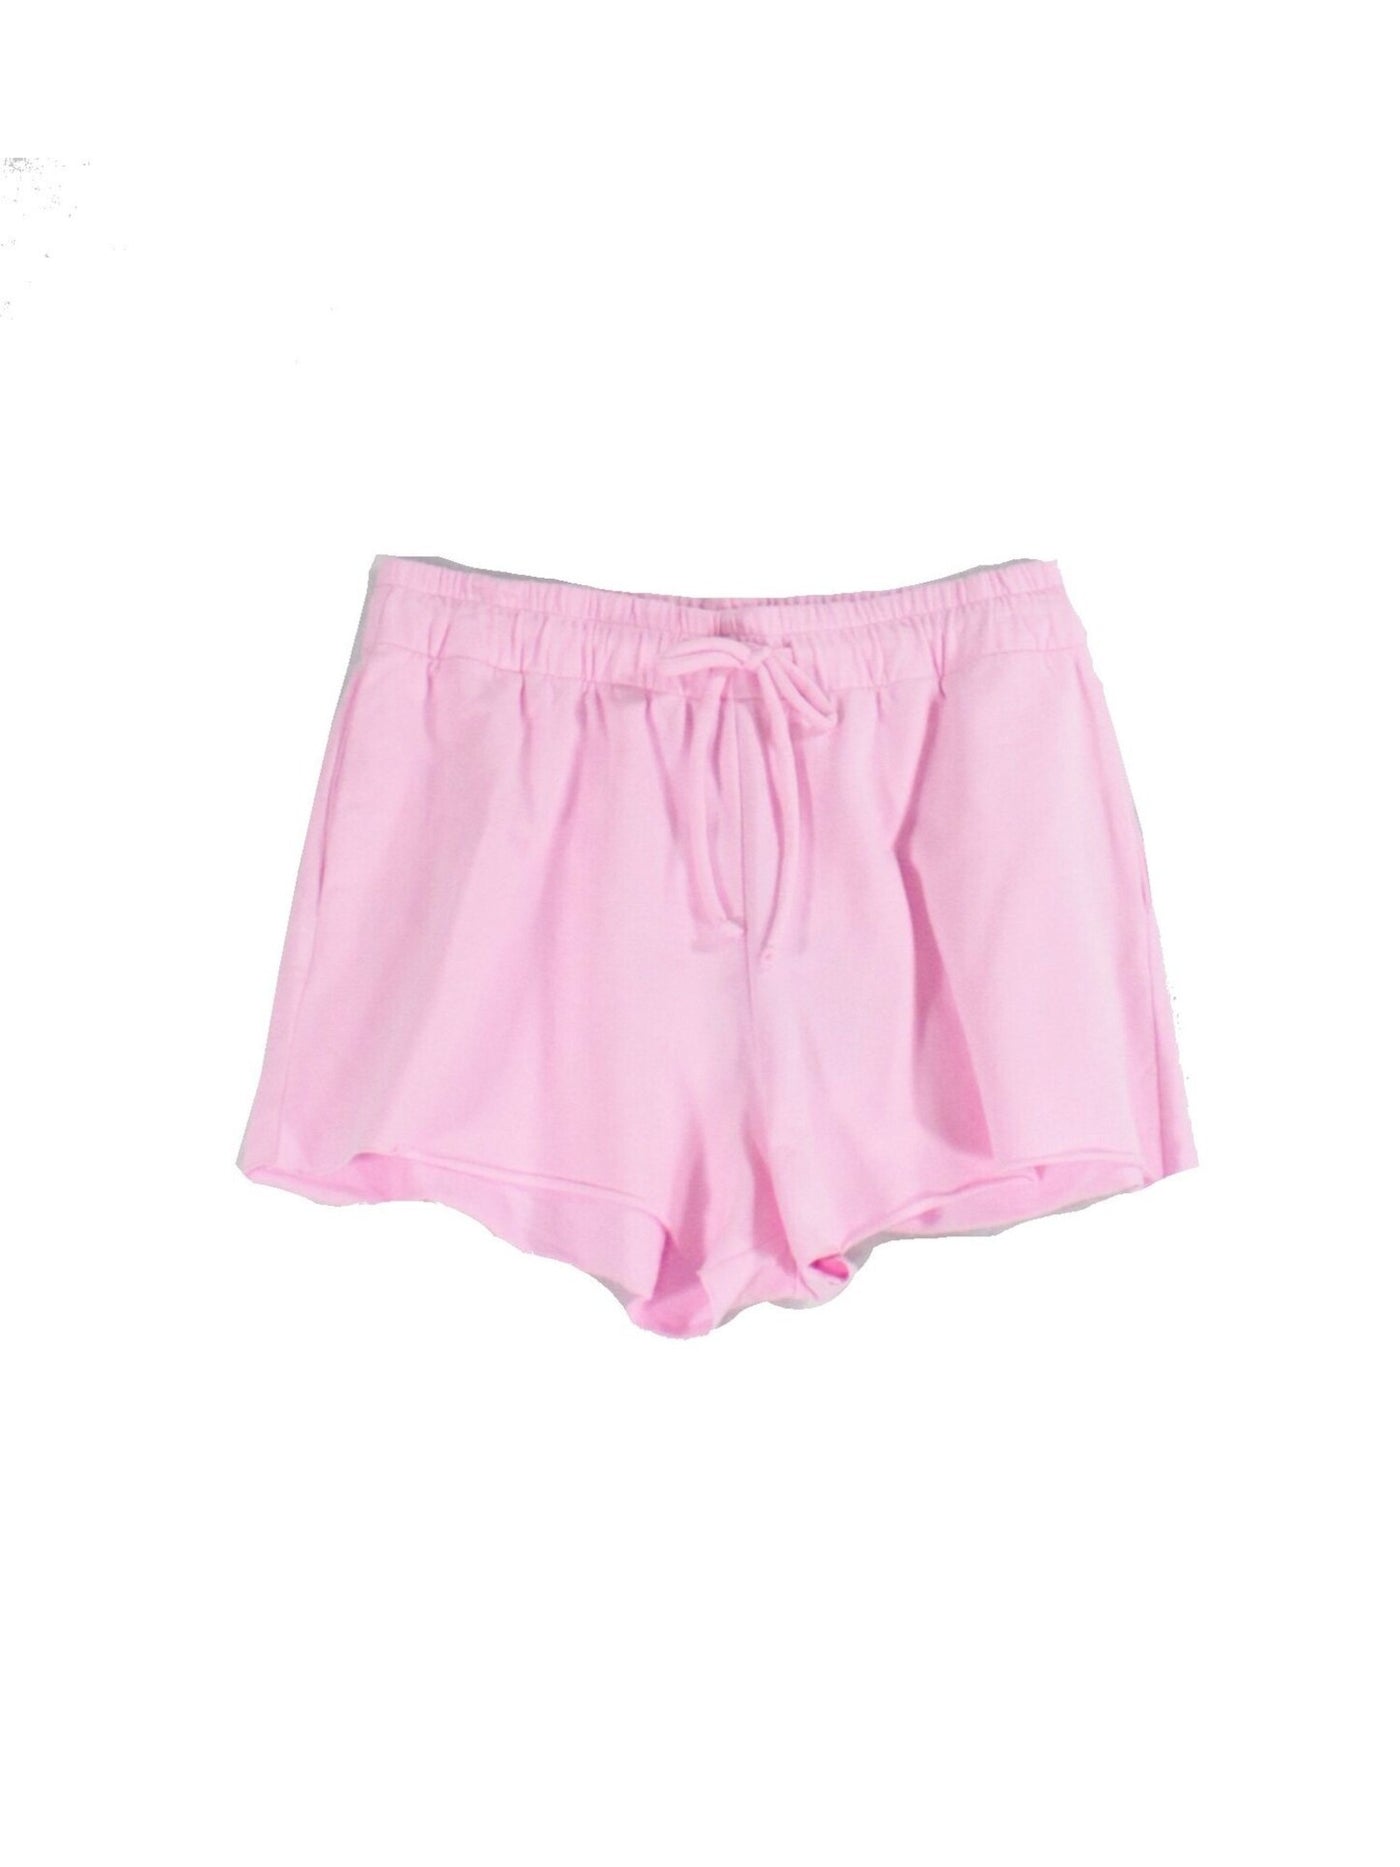 BAM BY BETSY & ADAM Womens Pink Stretch Tie Short Length Raw Hem, Pull-on Shorts L